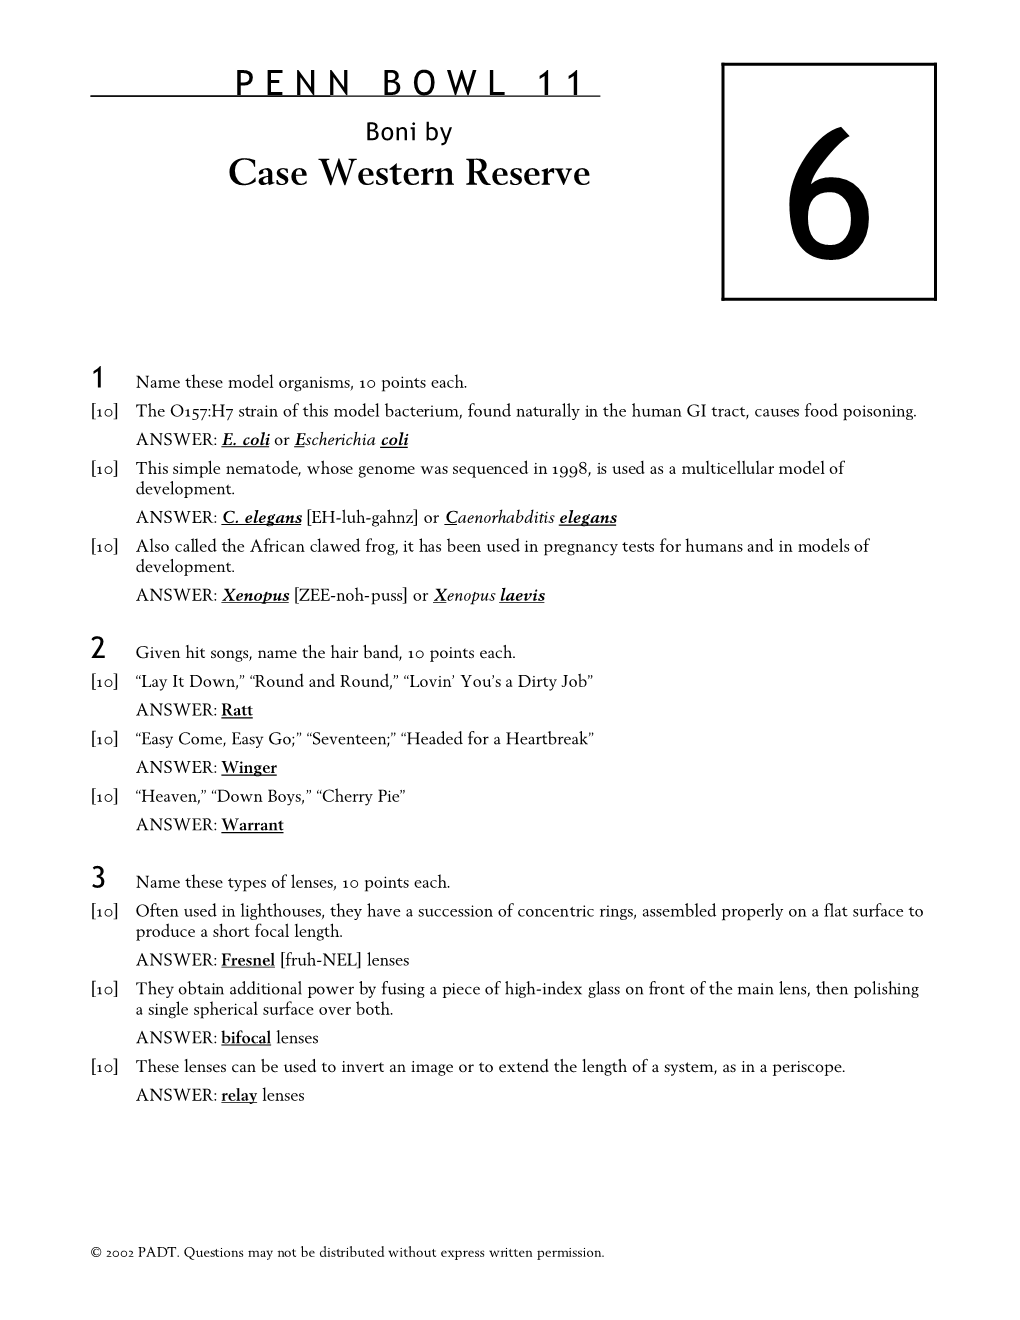 Case Western Reserve 6